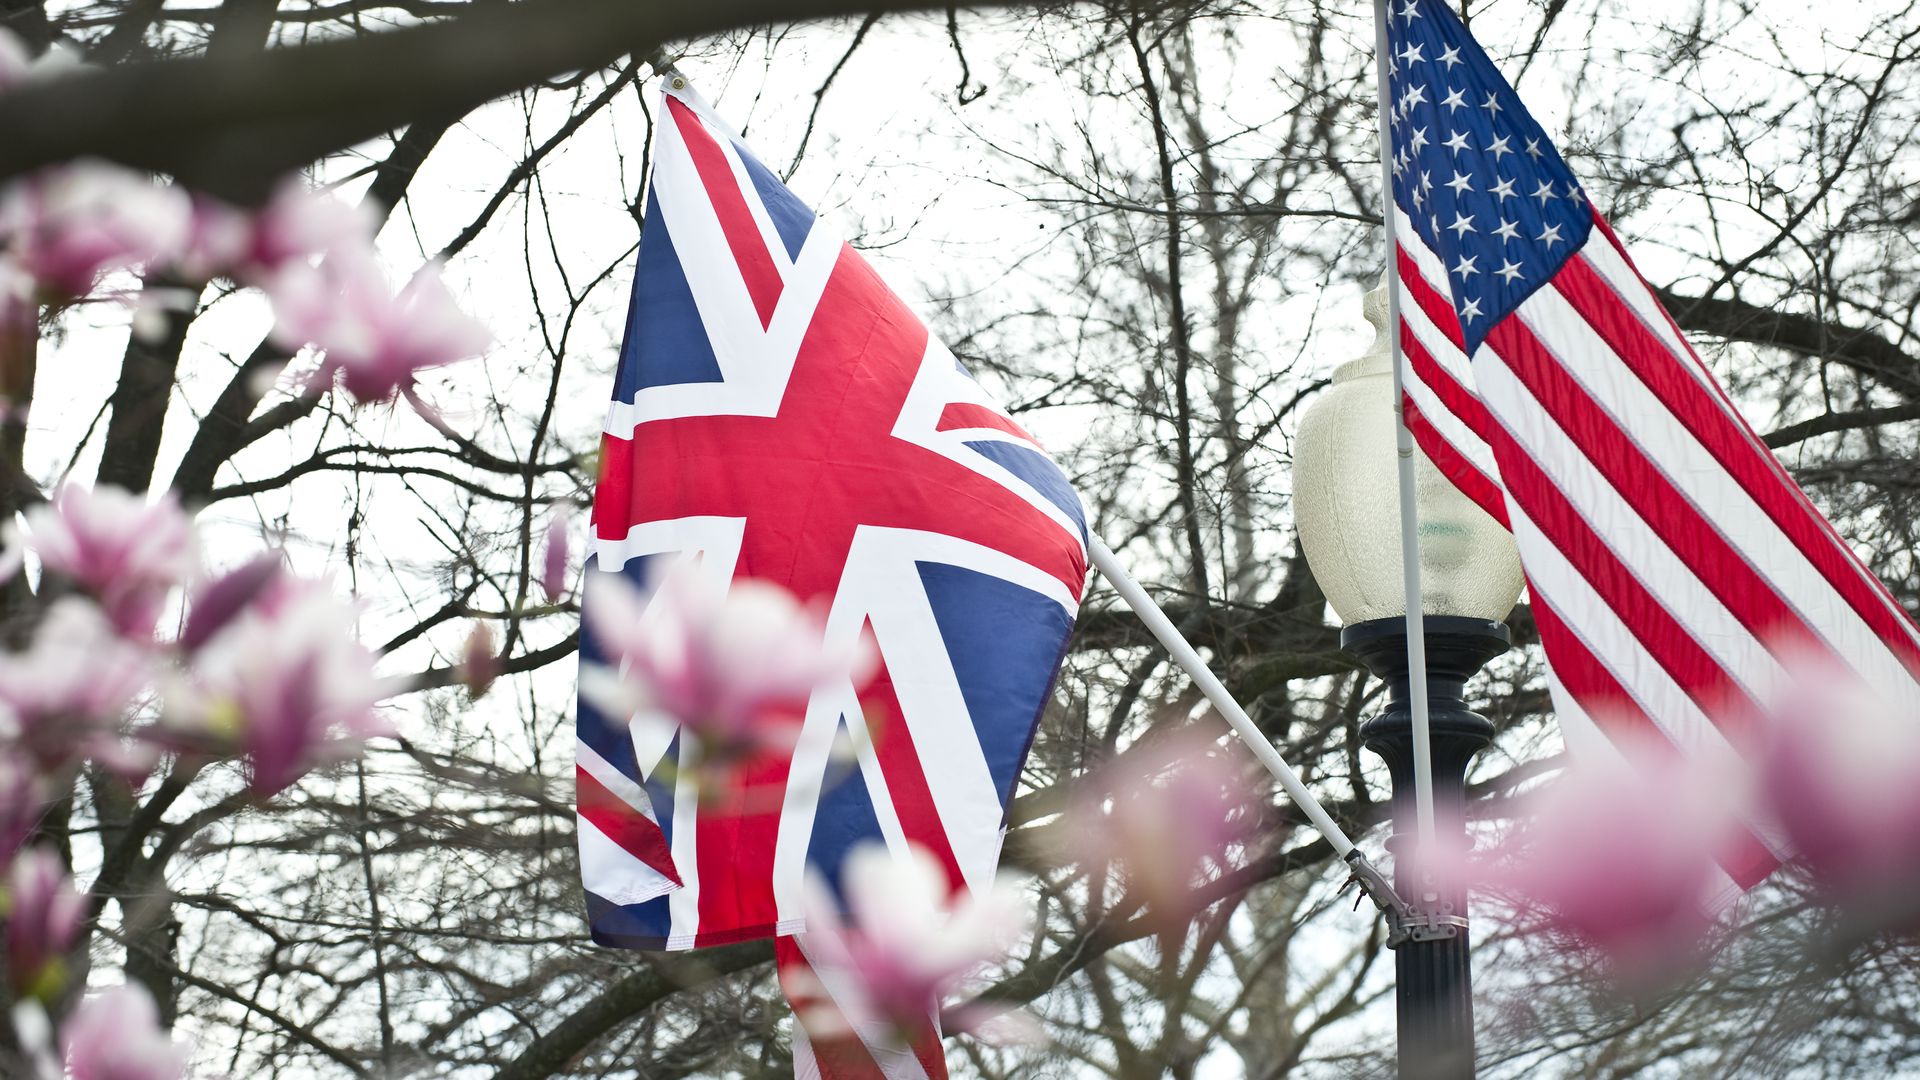 The U.S. and U.K. flags 